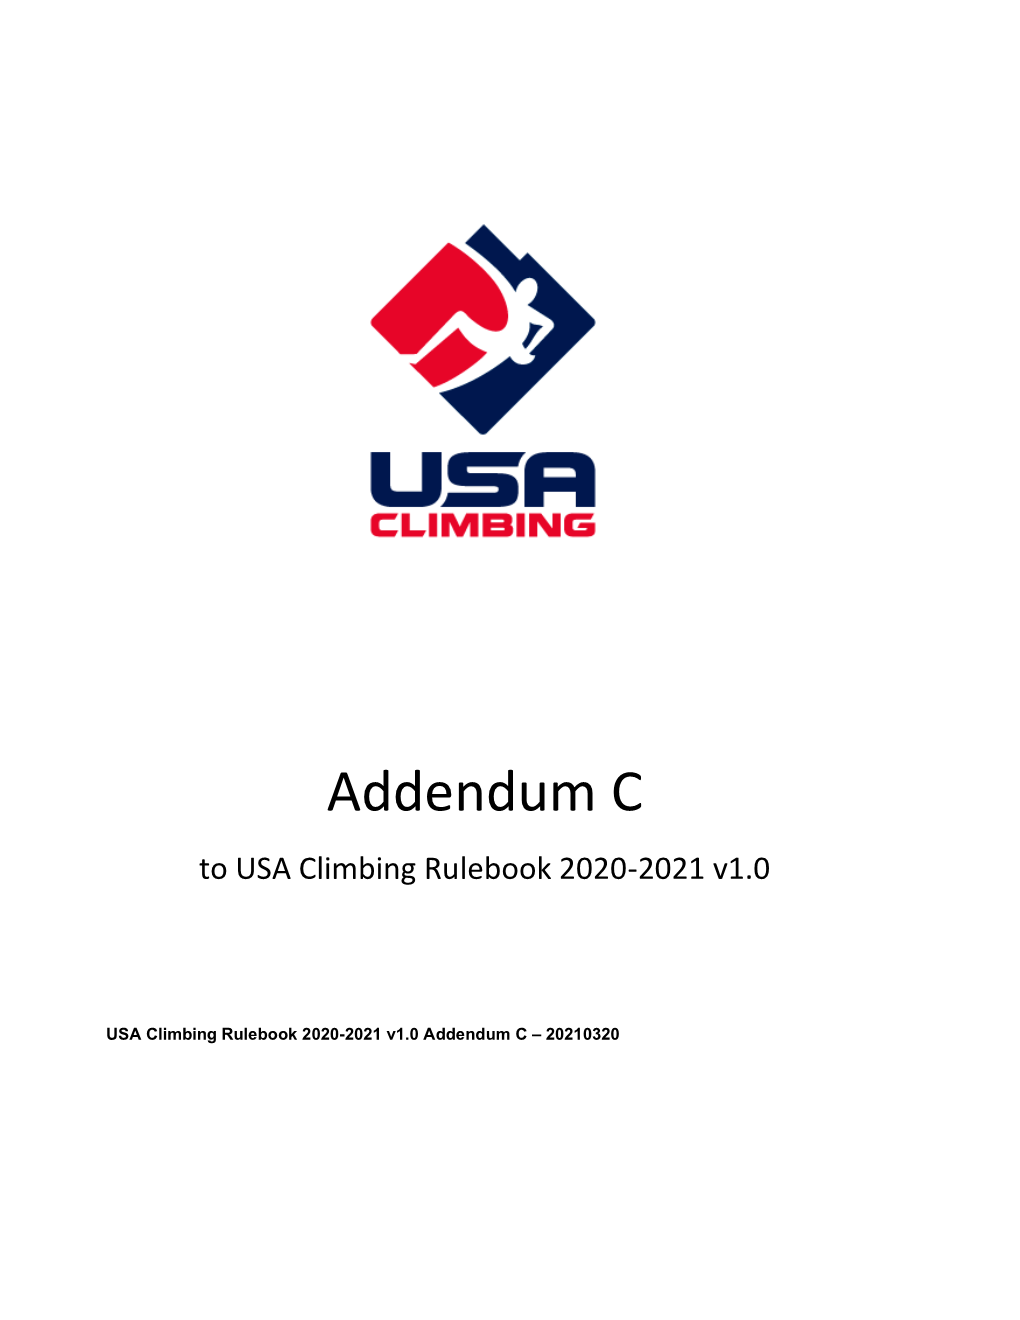 USA Climbing Rulebook 2020-2021 Addendum C